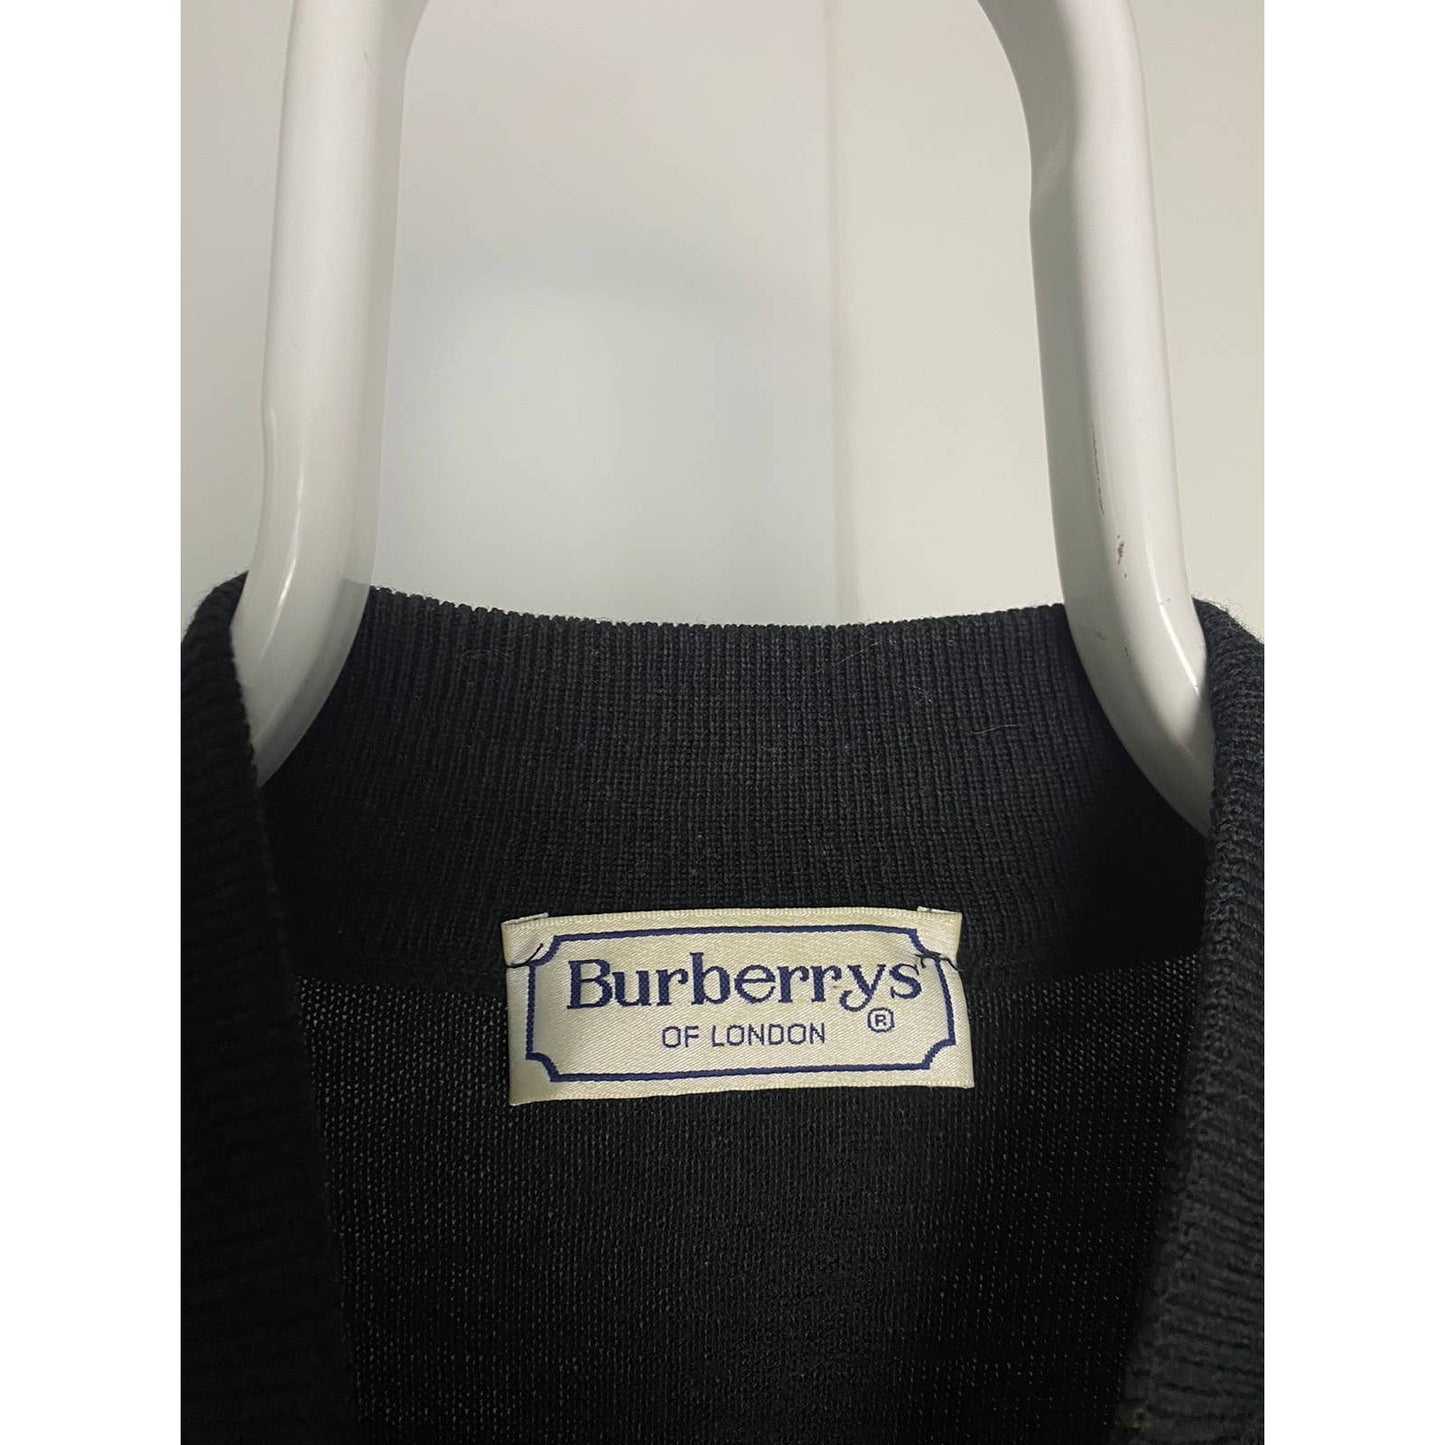 Burberry vintage black sweater small logo Burberrys